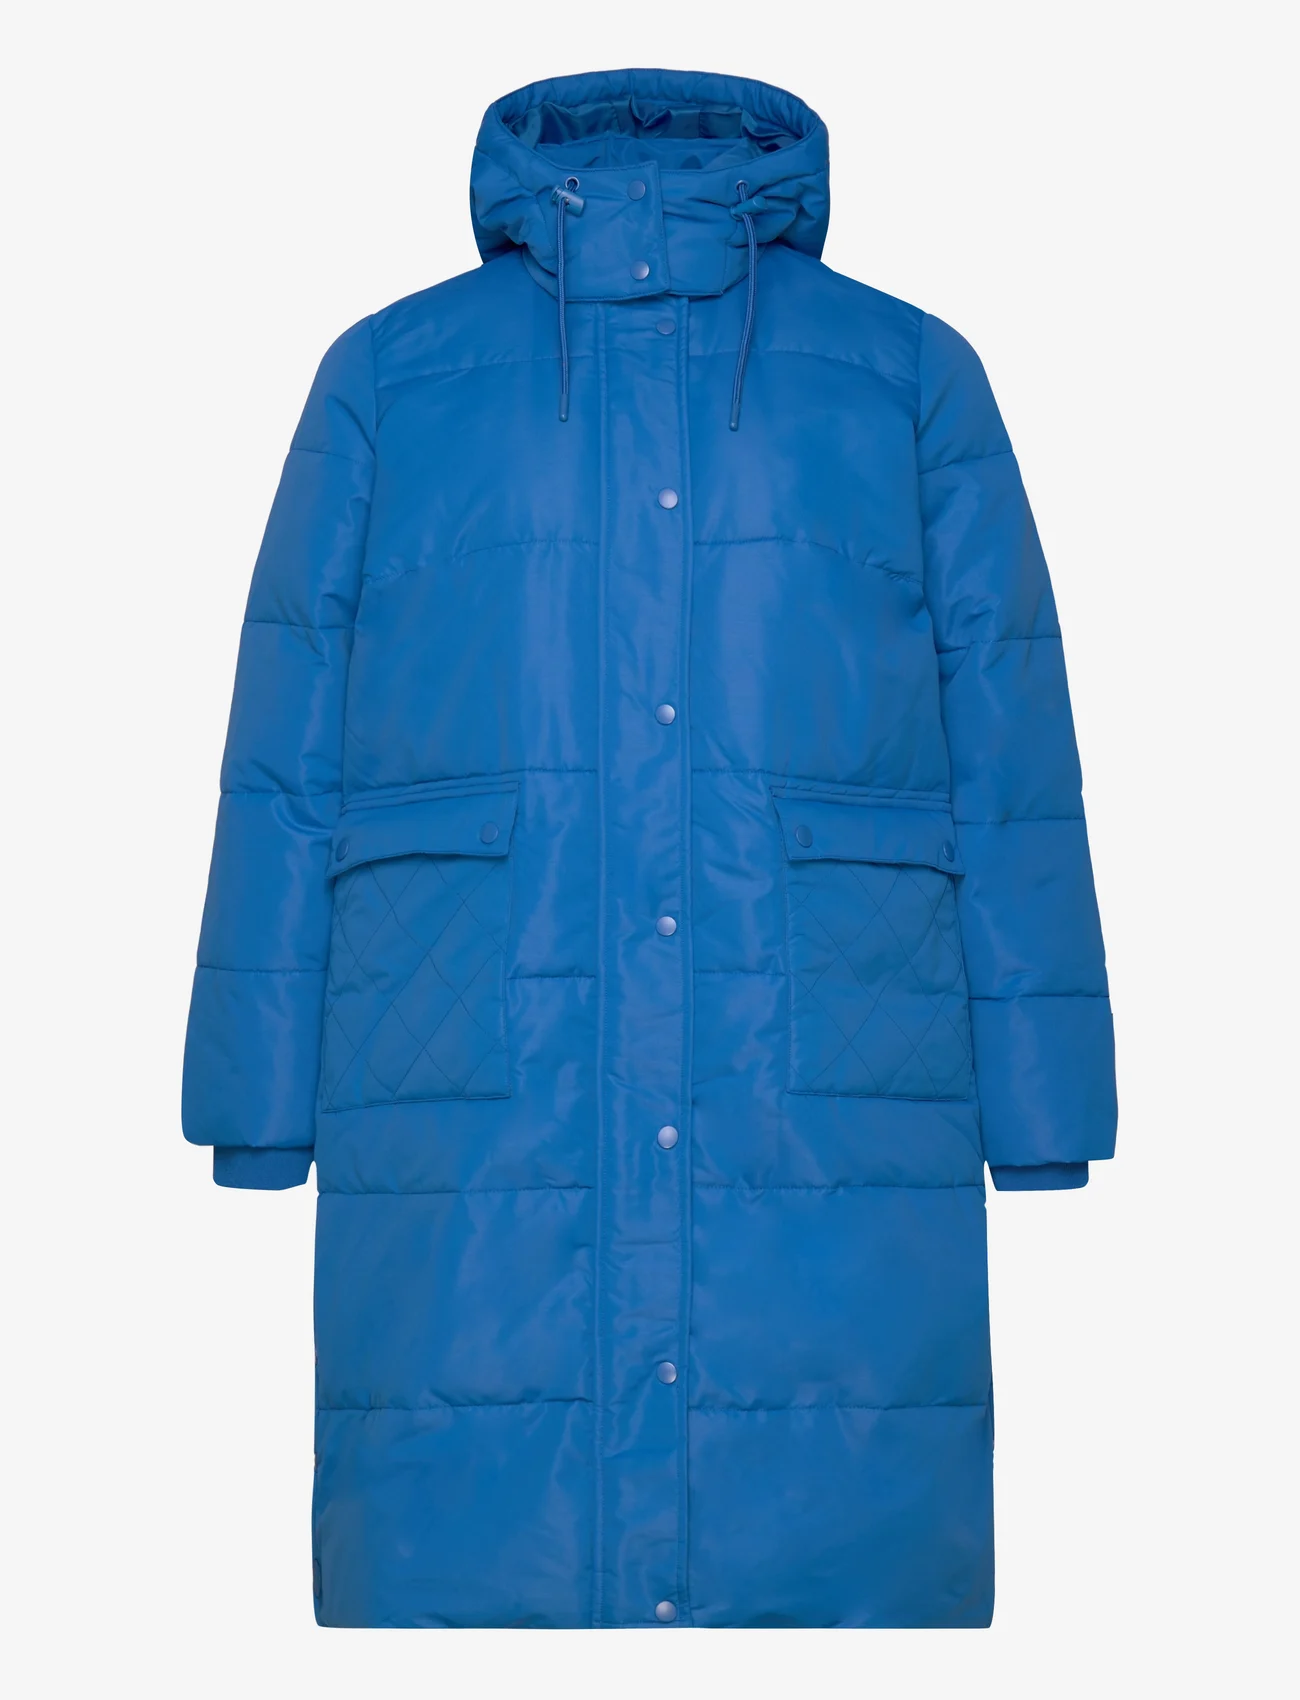 Zizzi - MHONGKONG, L/S, COAT - winter jackets - blue - 0